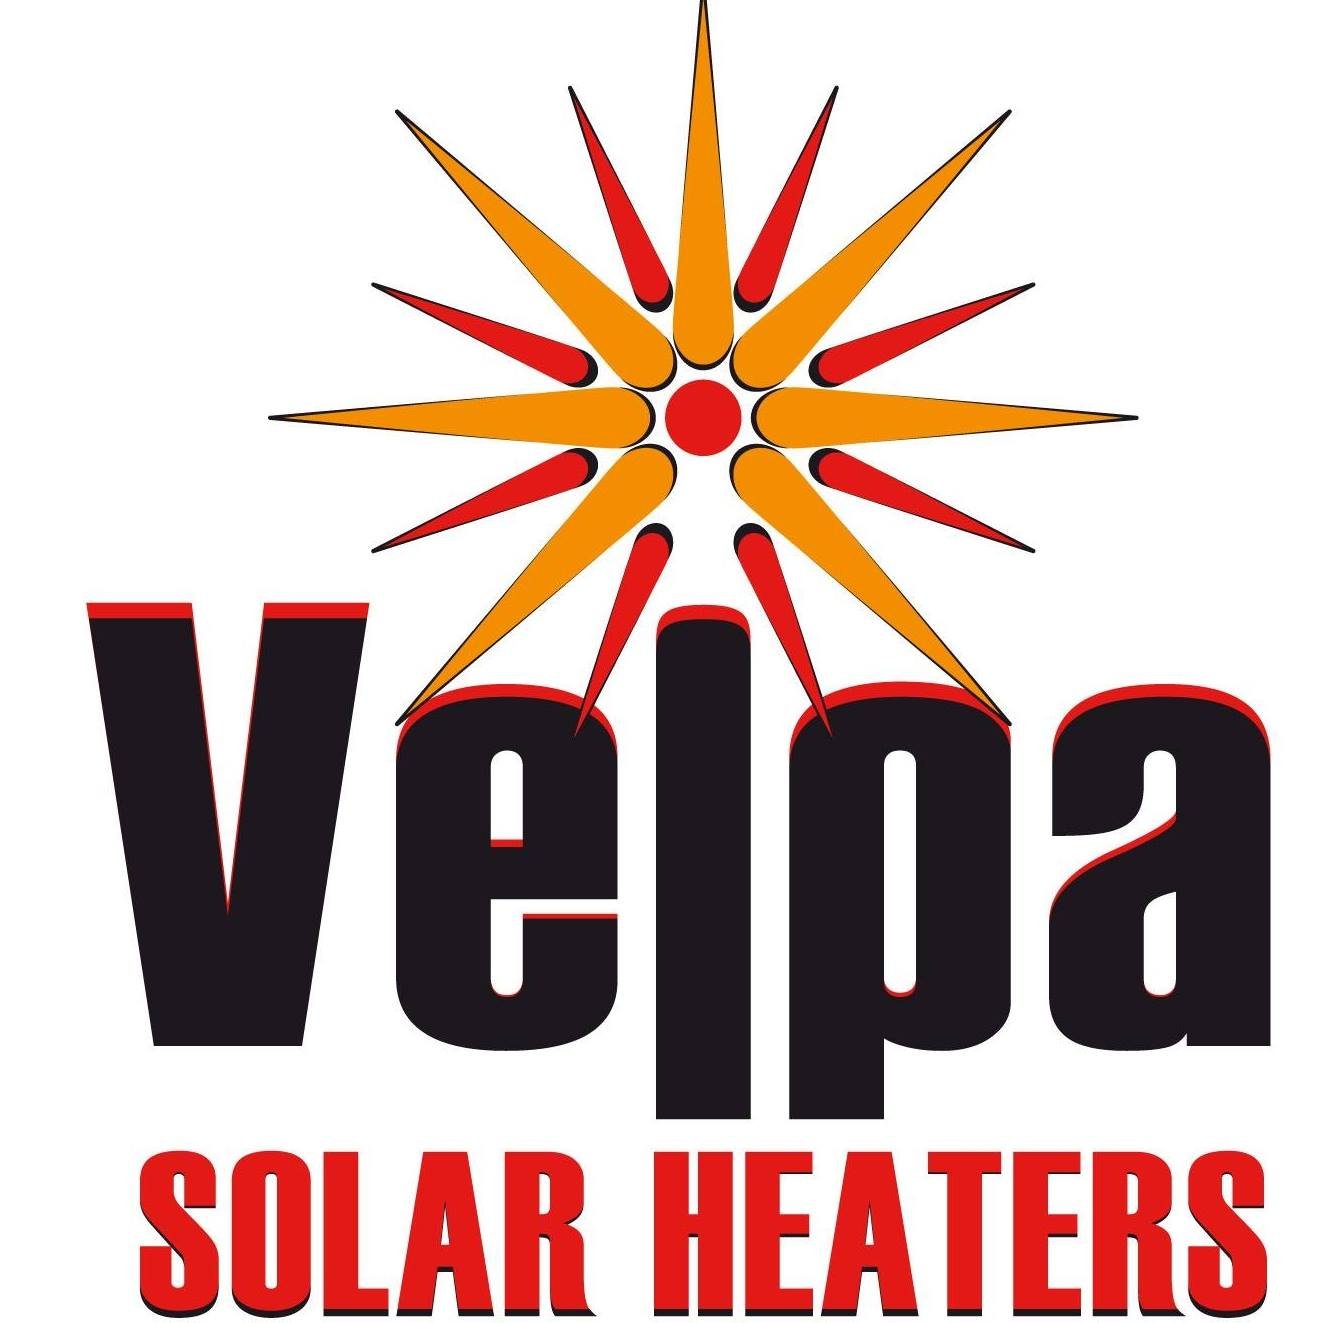 VELPA SOLAR HEATERS cover